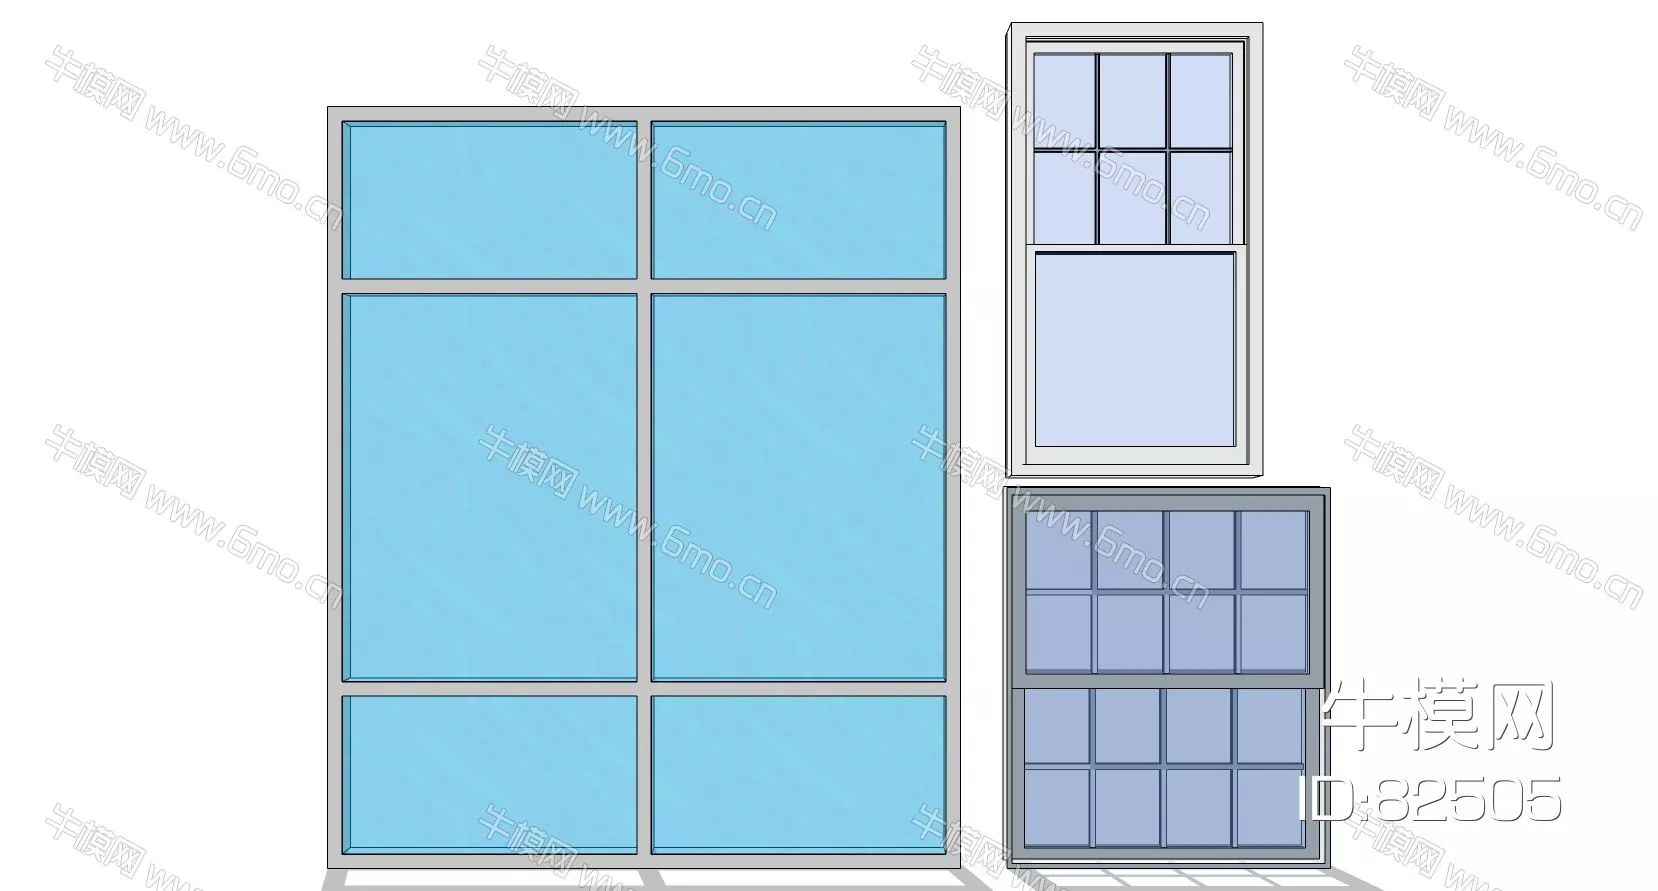 MODERN DOOR AND WINDOWS - SKETCHUP 3D MODEL - ENSCAPE - 82505